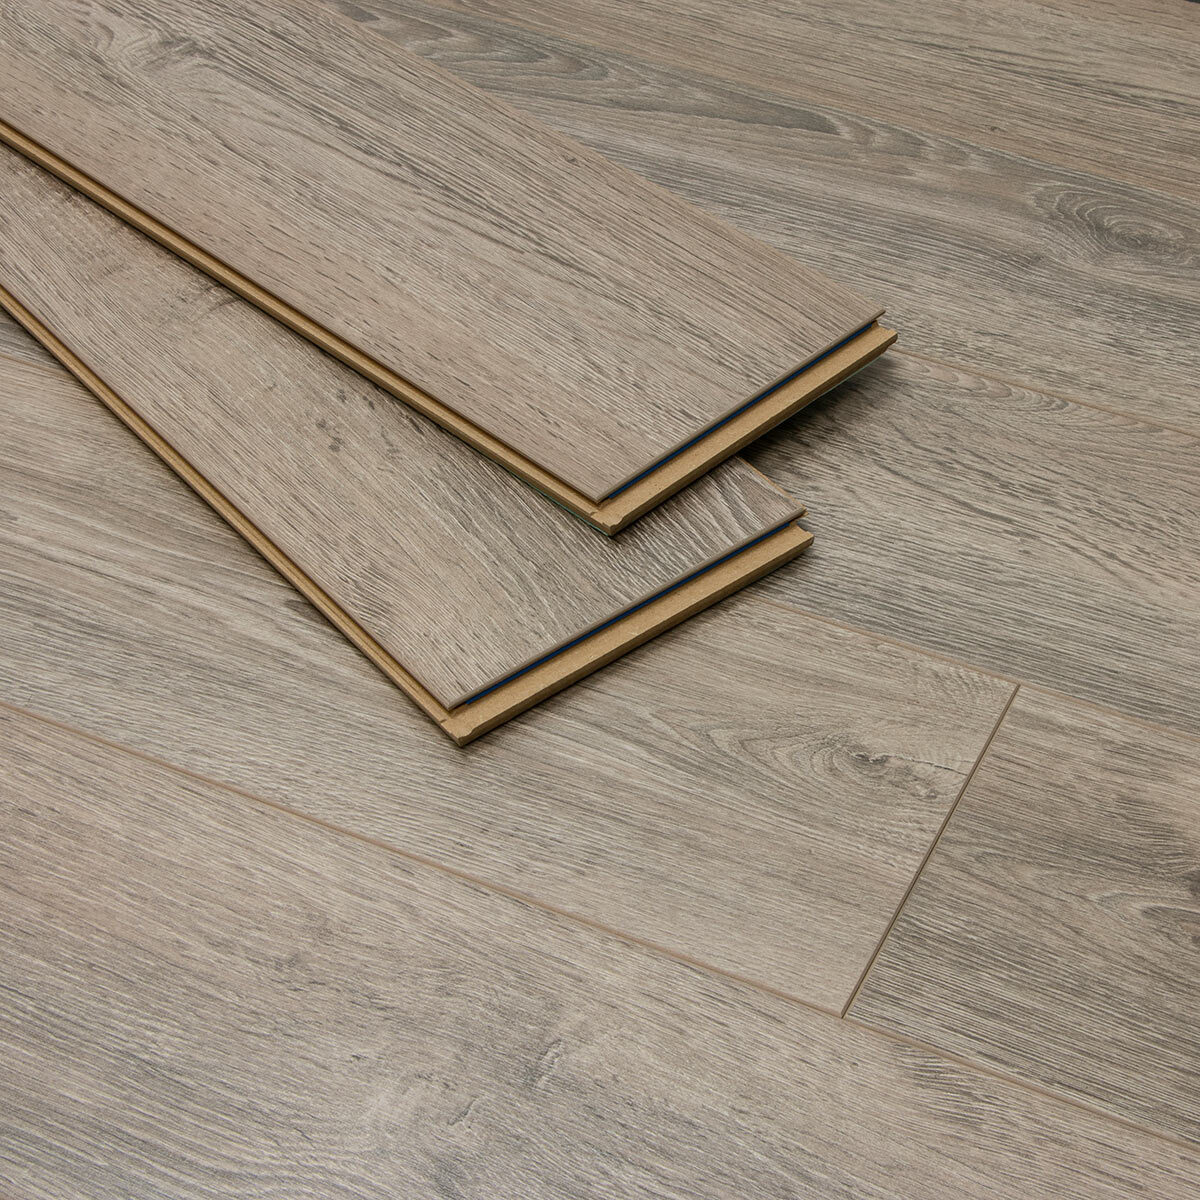 Ac5 Laminate Flooring, Costco Golden Select Laminate Flooring Reviews